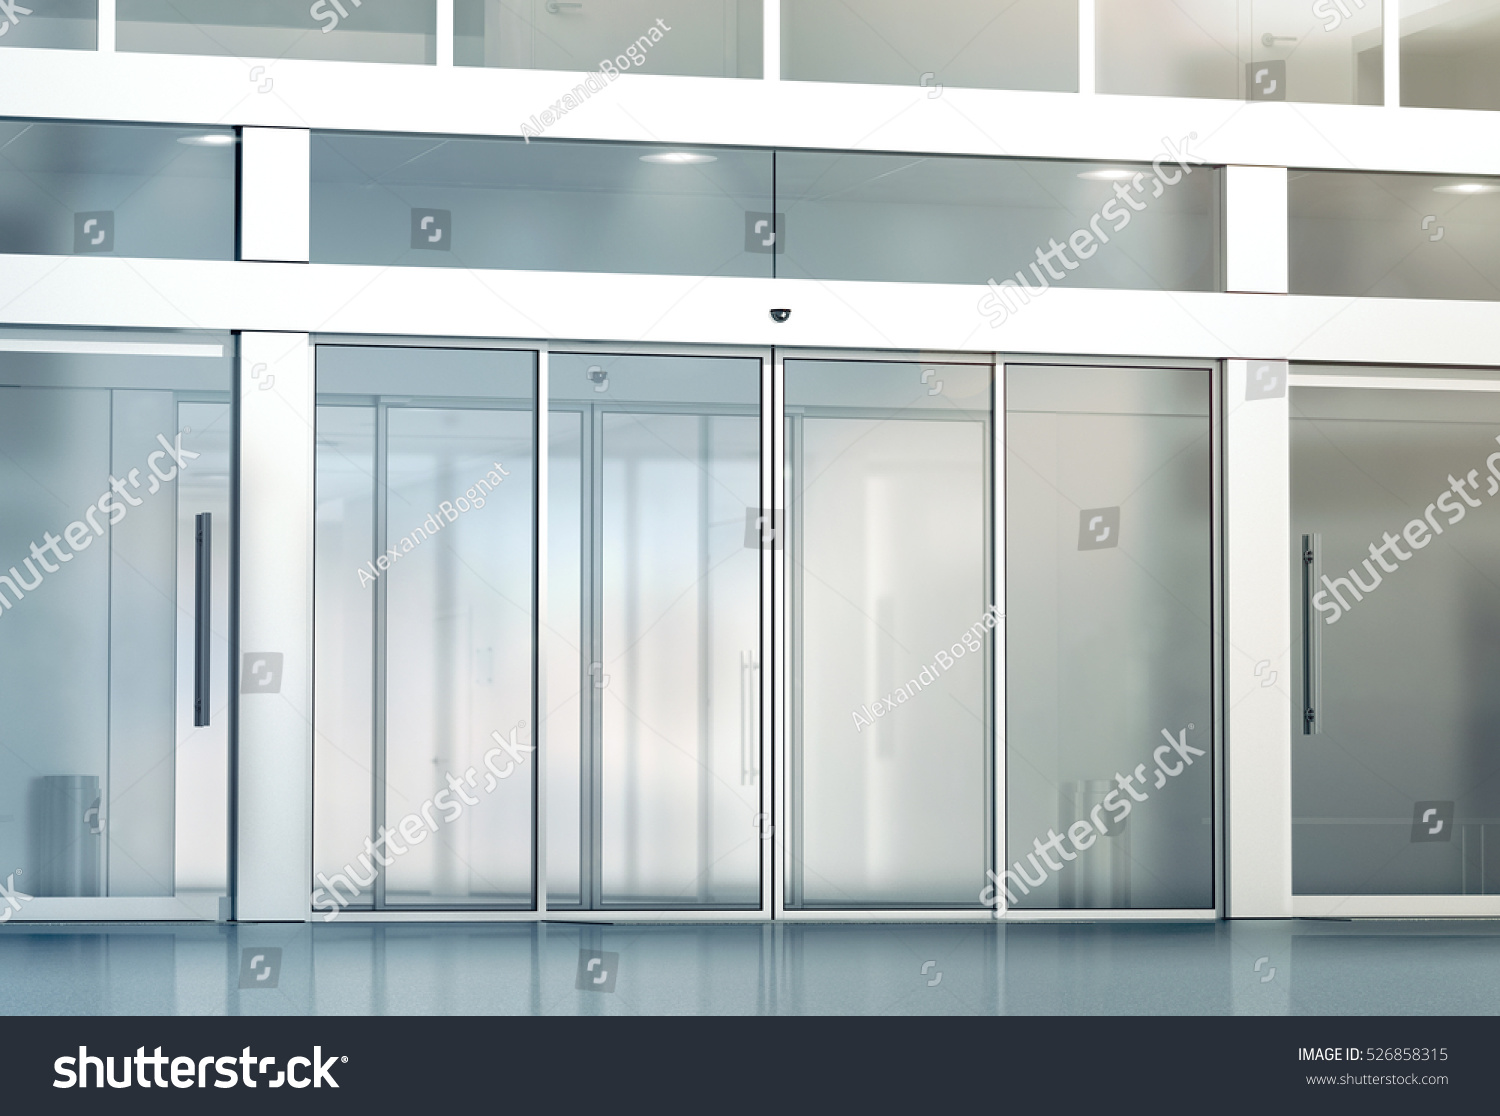 Download Blank Sliding Glass Doors Entrance Mockup Stock ...